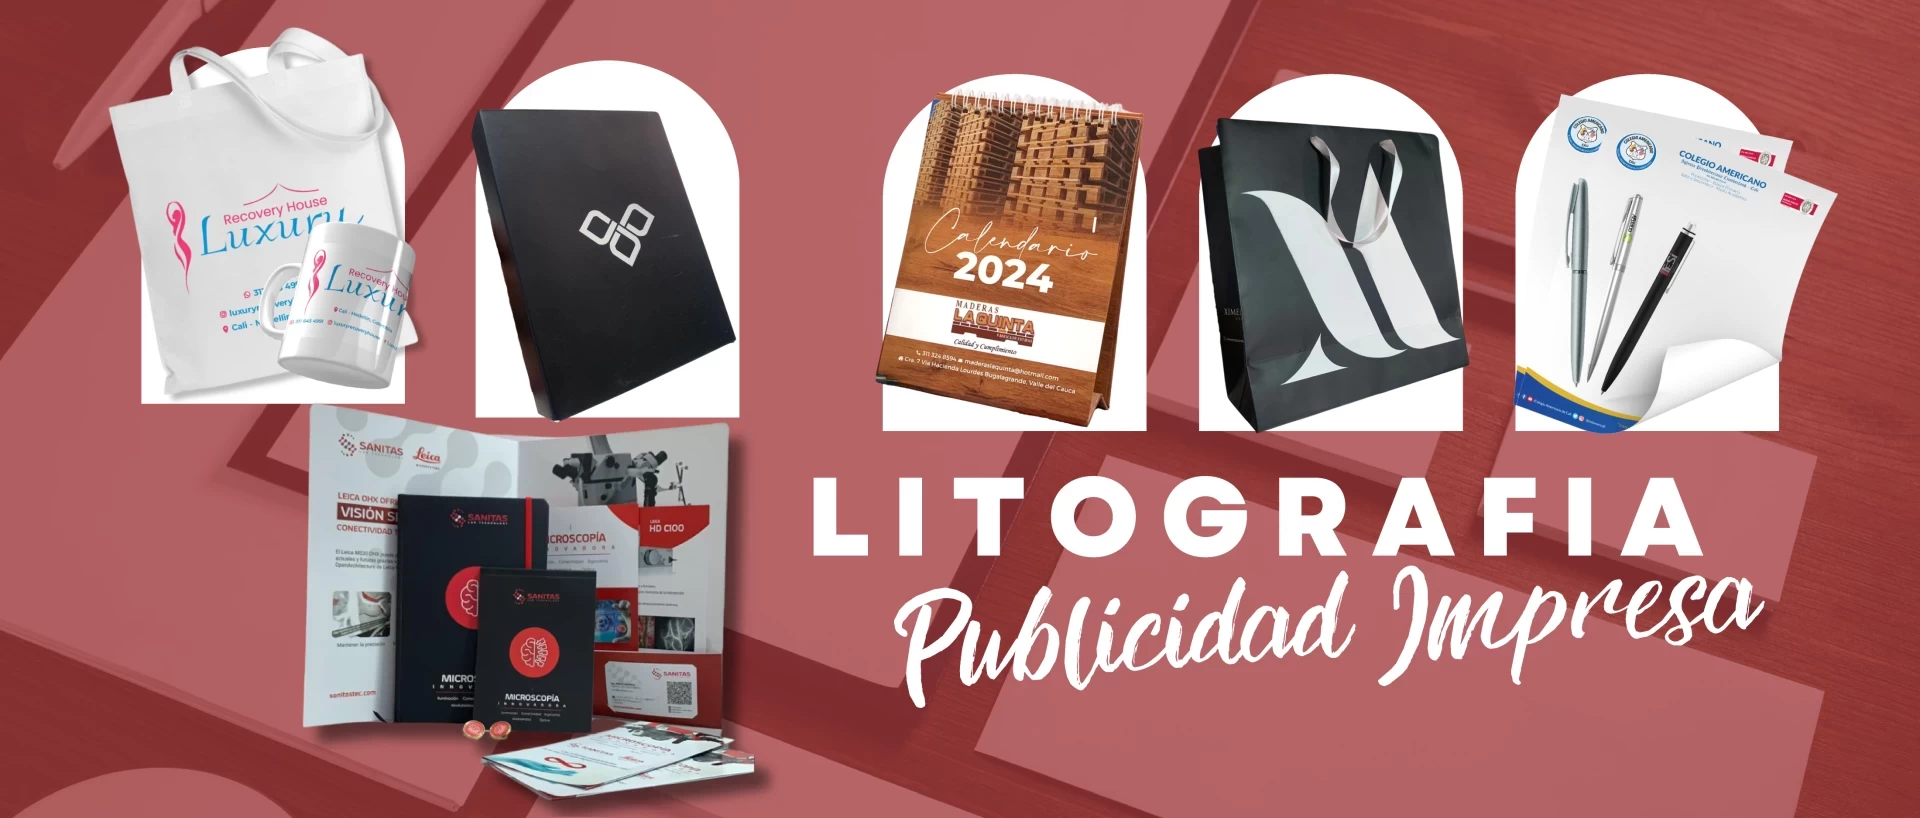 LITOGRAFIA Y TIPOGRAFIA PUBLICIDAD IMPRESA PAPELERIA COMERCIAL